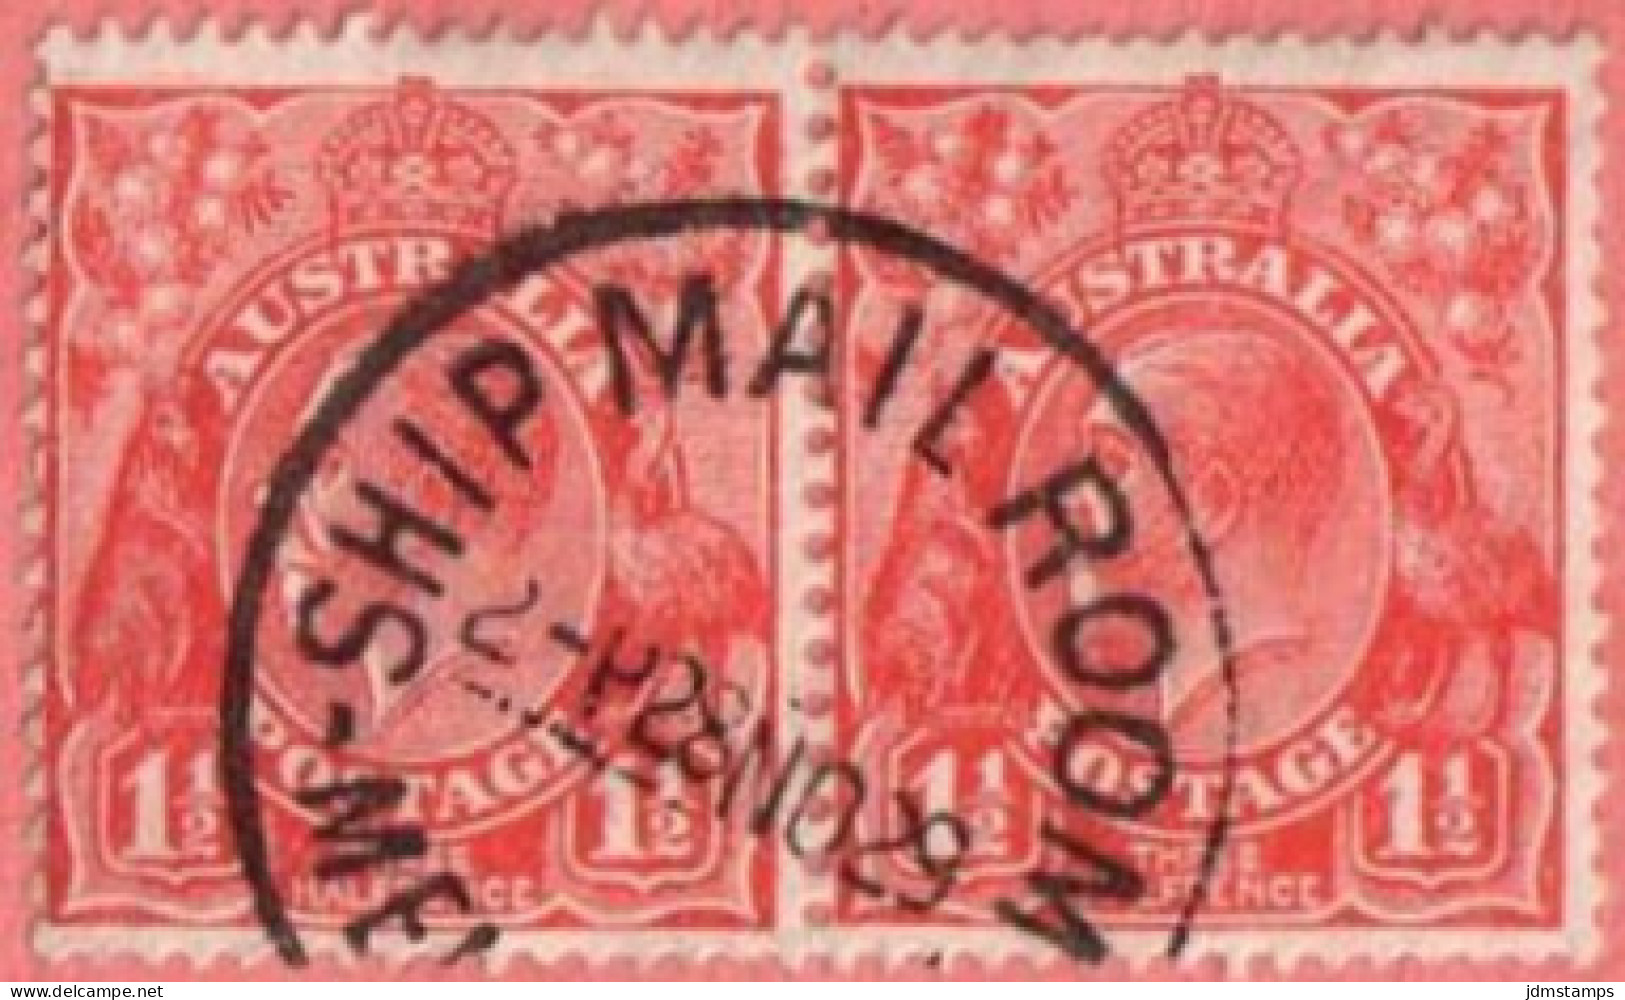 AUS SC #68 PR 1927 King George V  W/SON ("SHIP MAIL ROOM / 28 NO 29"), R Stamp - Sm Adh On Back, CV $3.50 - Oblitérés